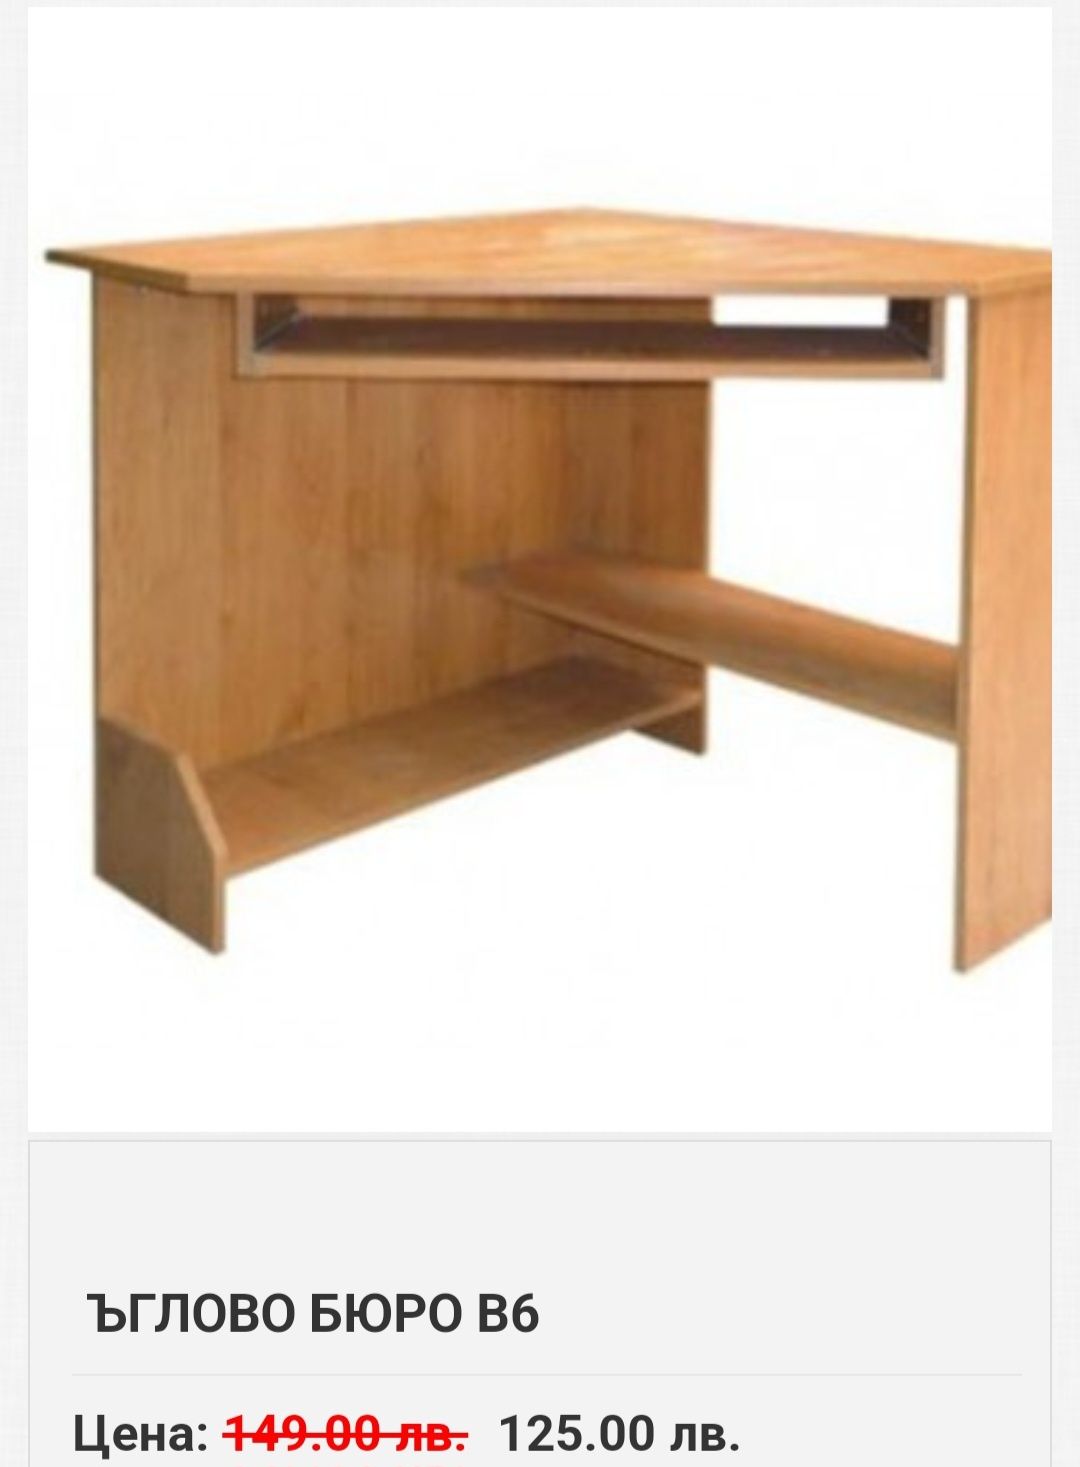 Ъглово бюро за детска стая и подвижно малко бюро